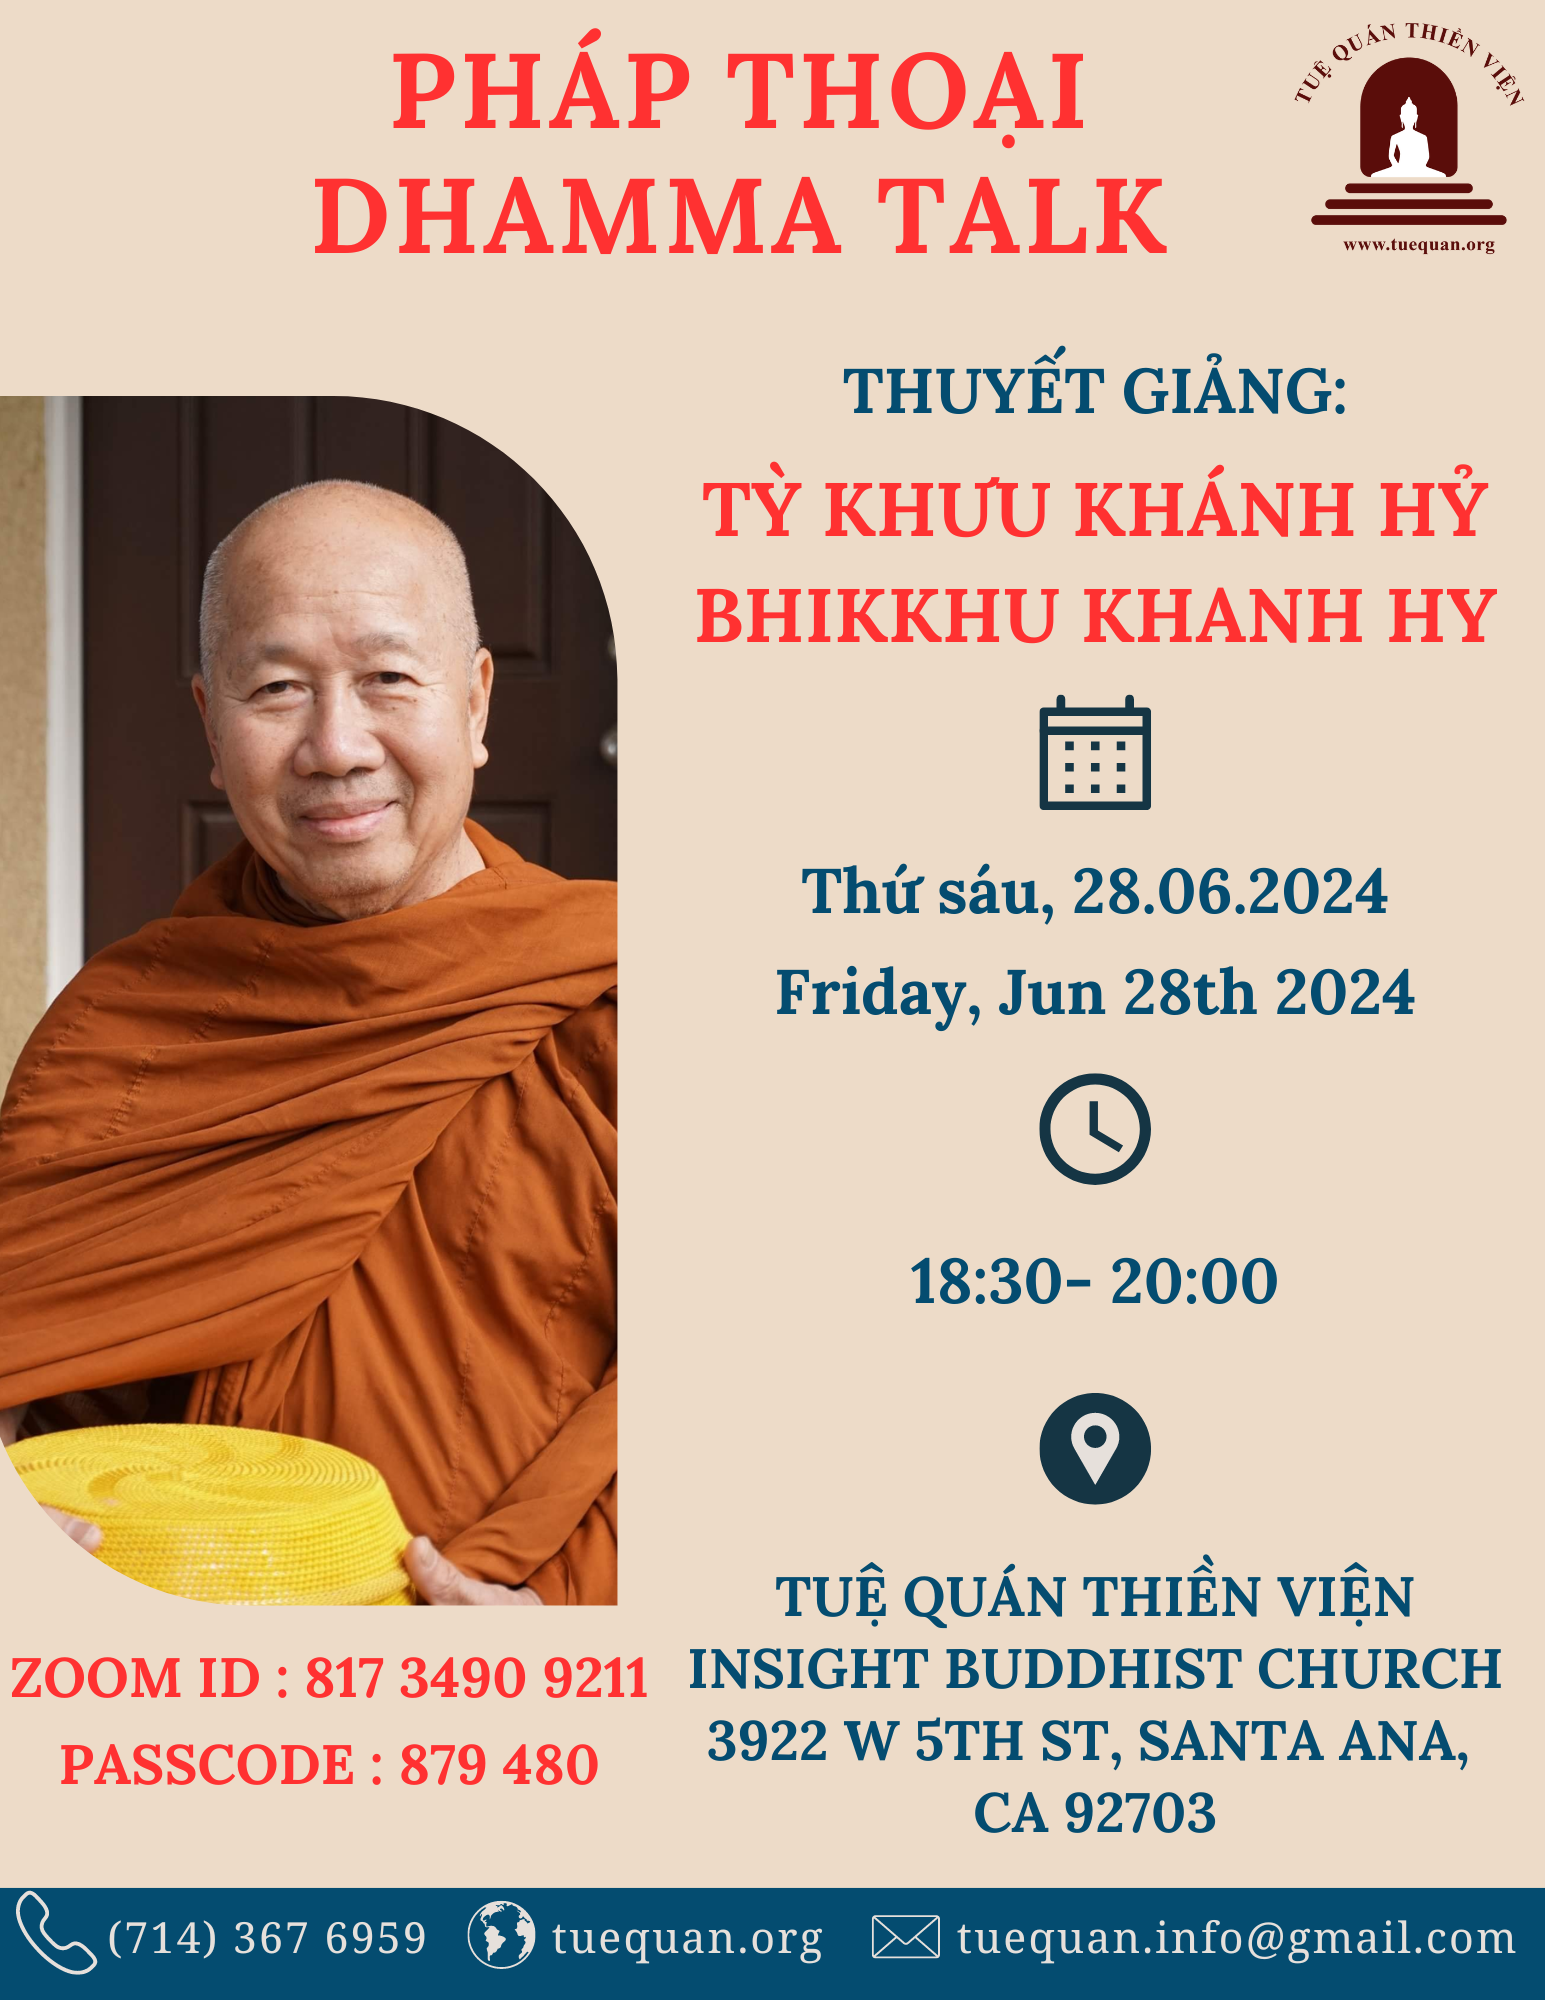 Friday Dhamma talk, Jun 28th 2024